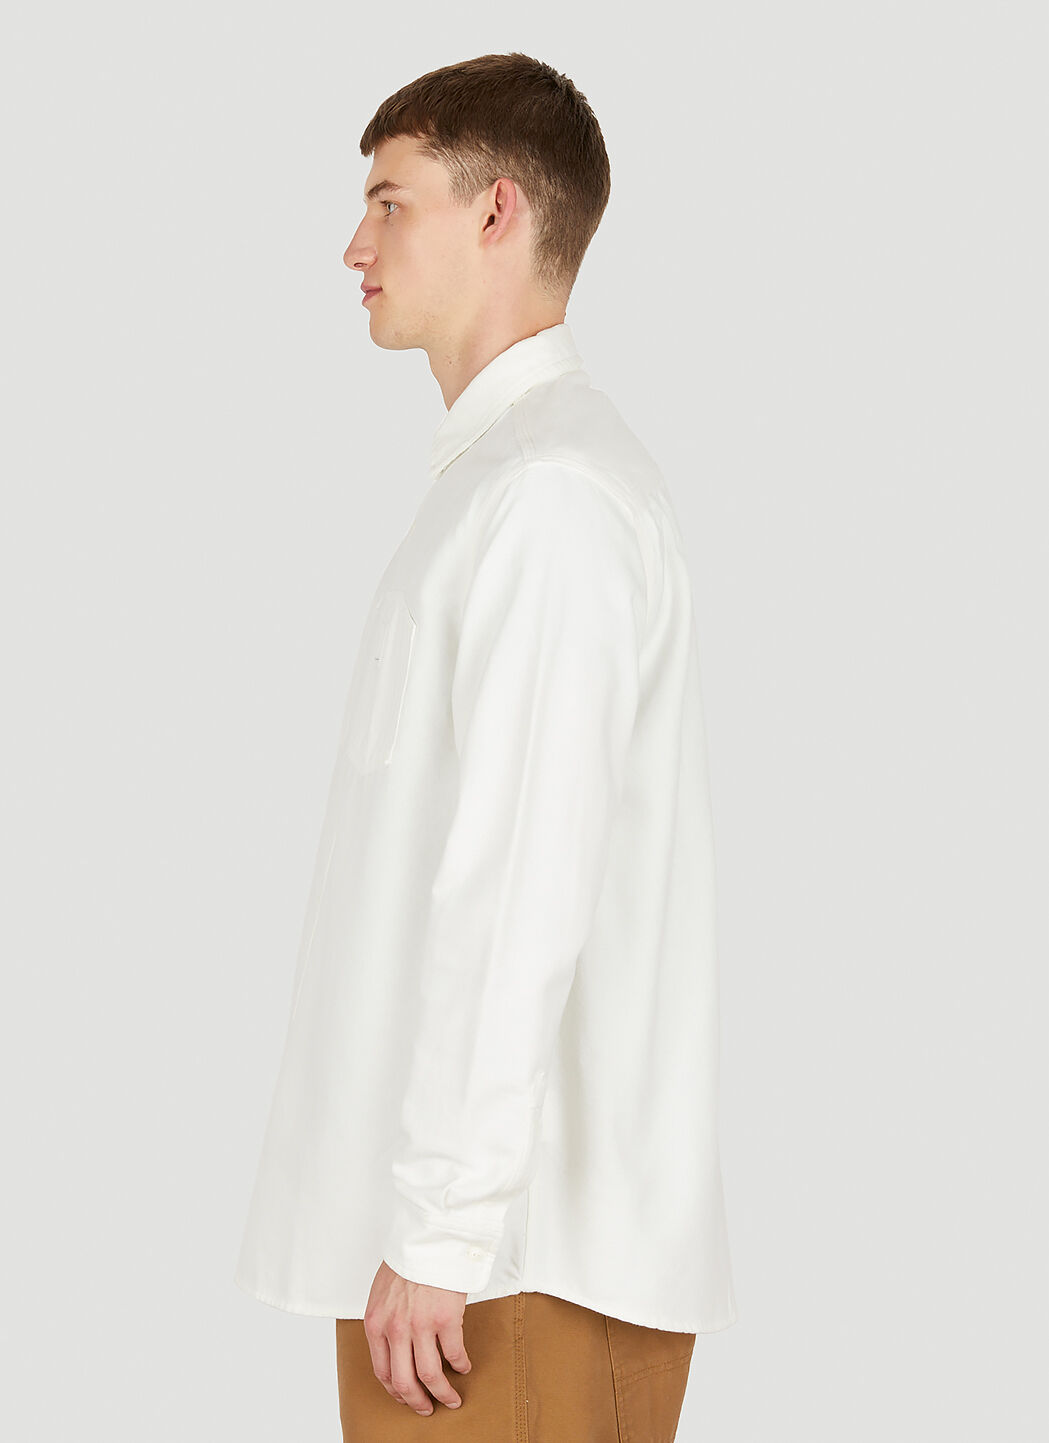 Toogood x Carhartt WIP Draughtsman X Tony Shirt in White | LN-CC®